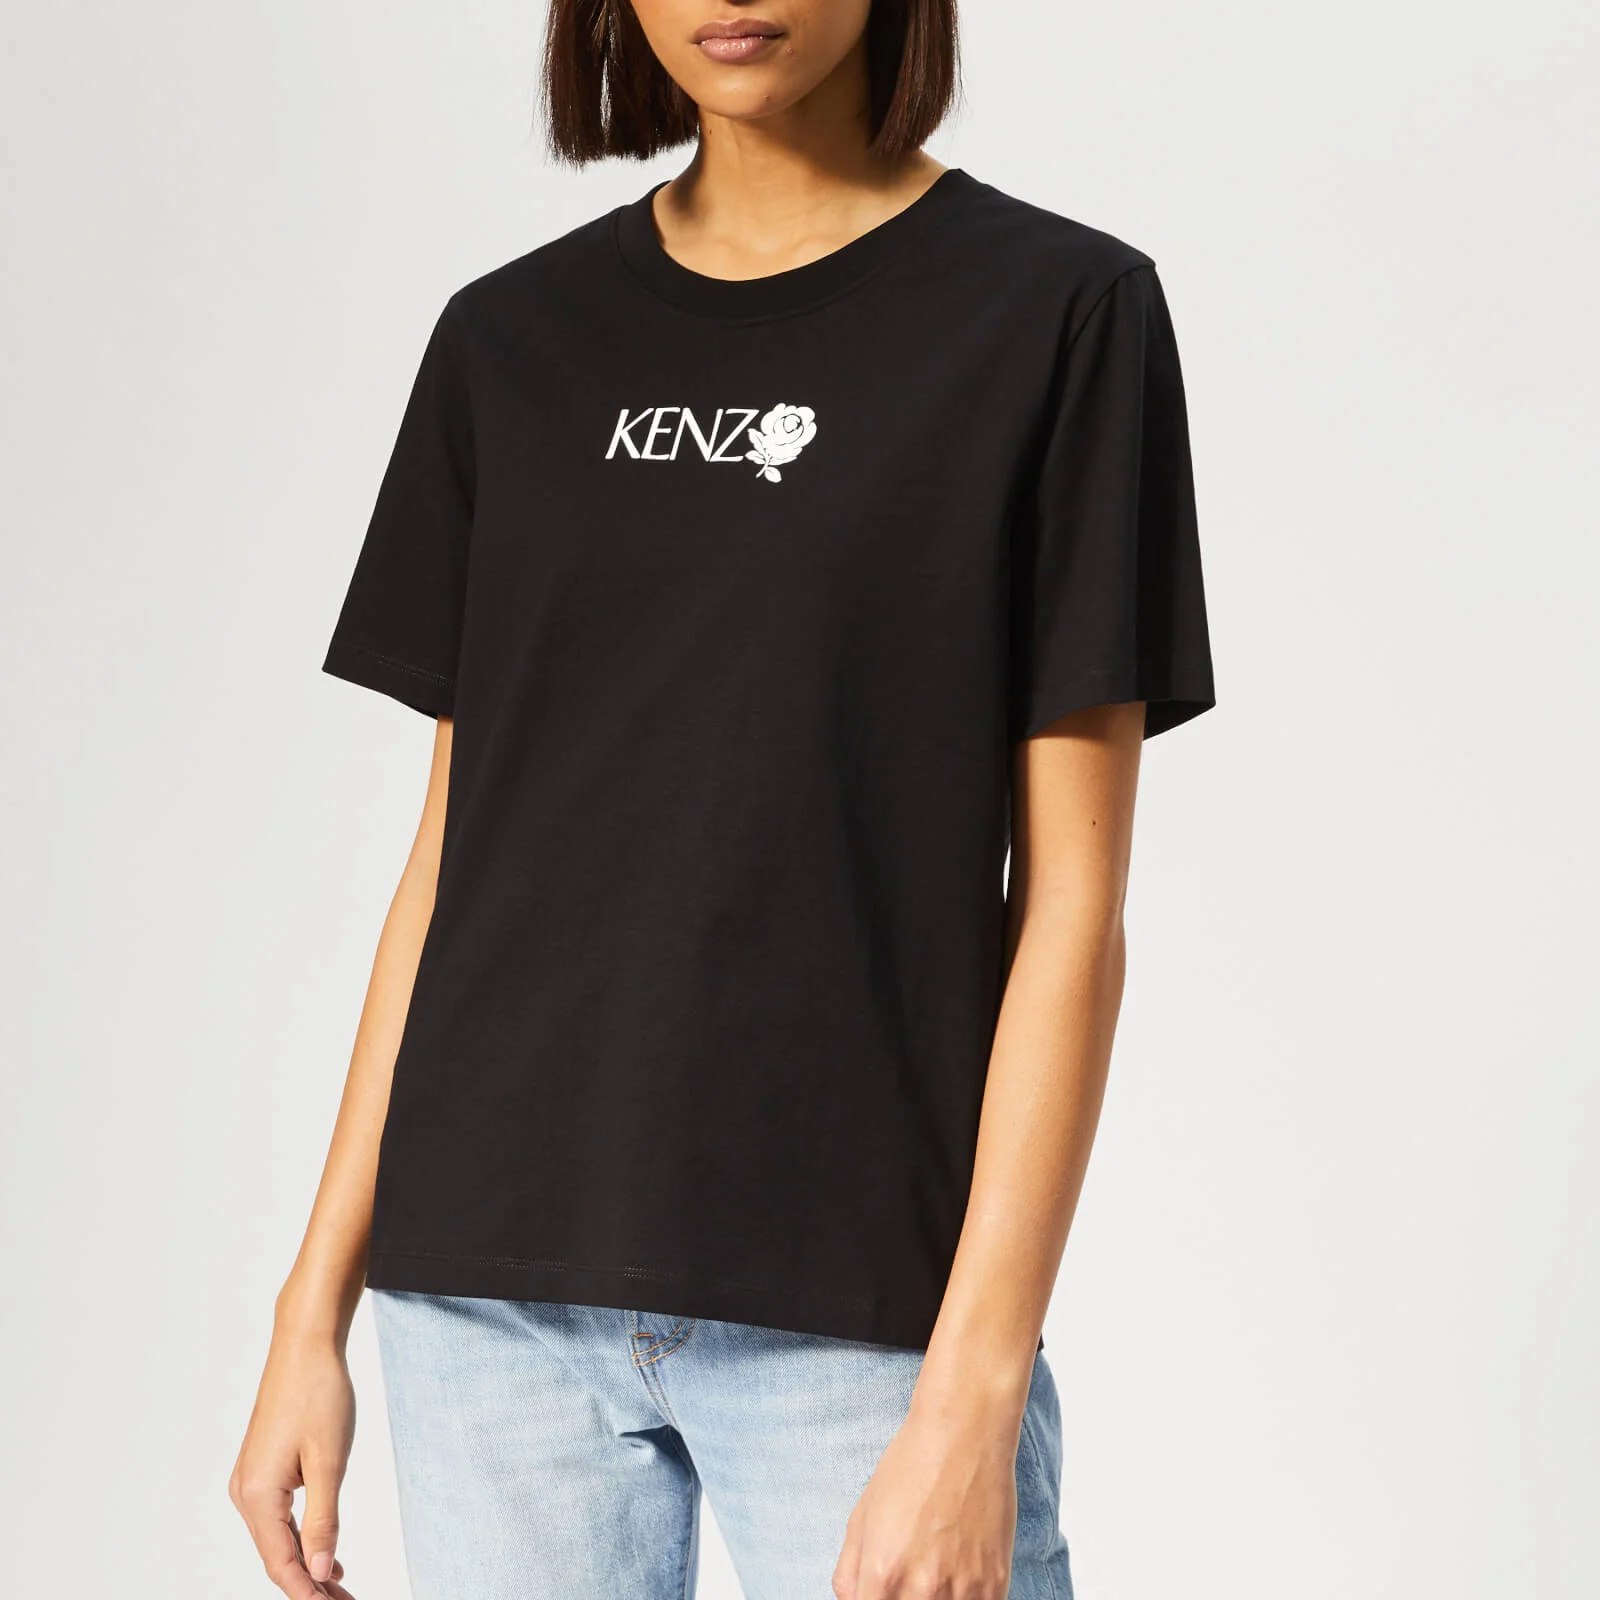 KENZO Women's Comfort T-Shirt - Black Image 1